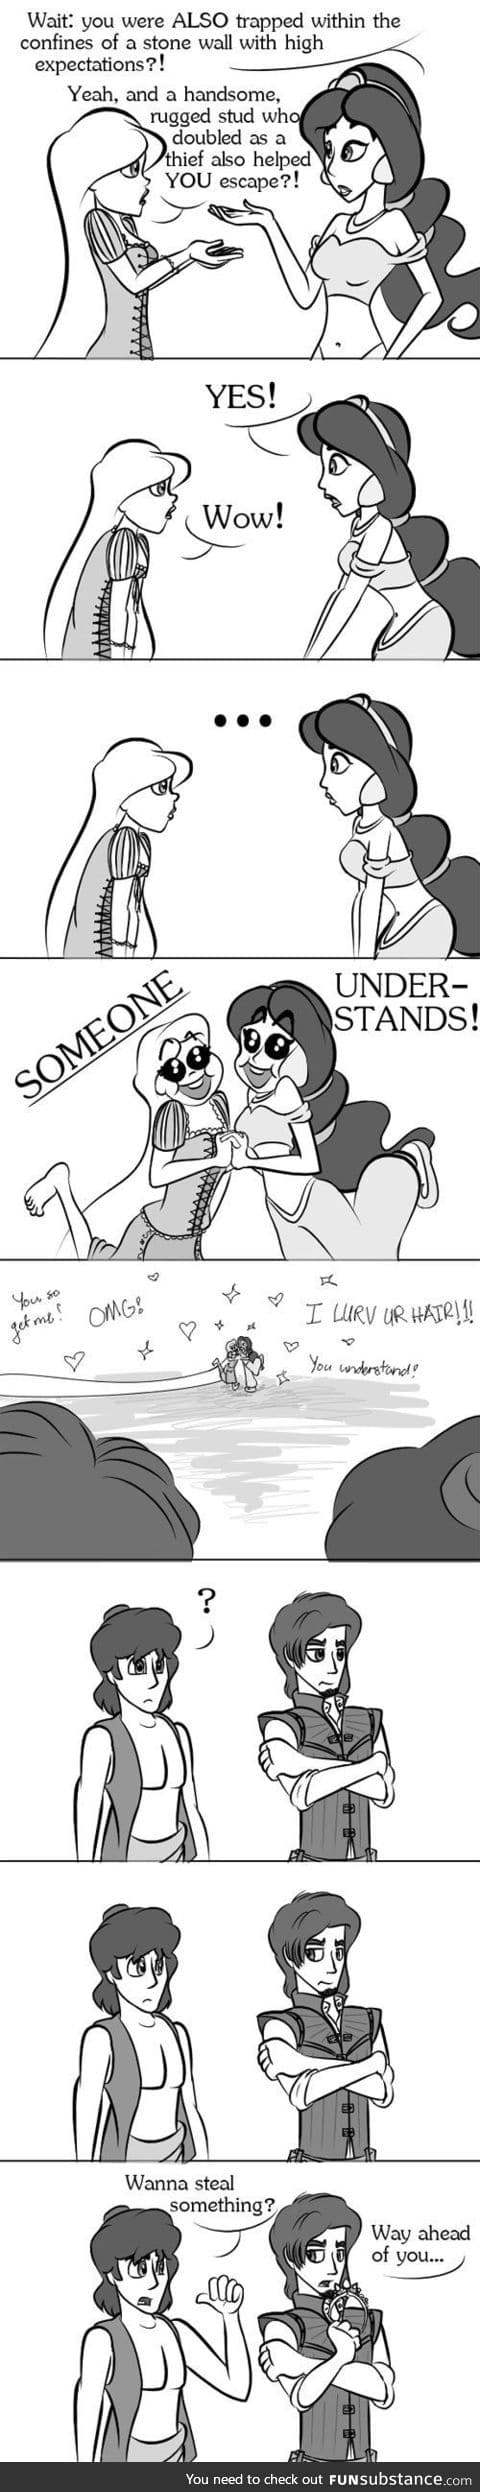 When Princesses meet....